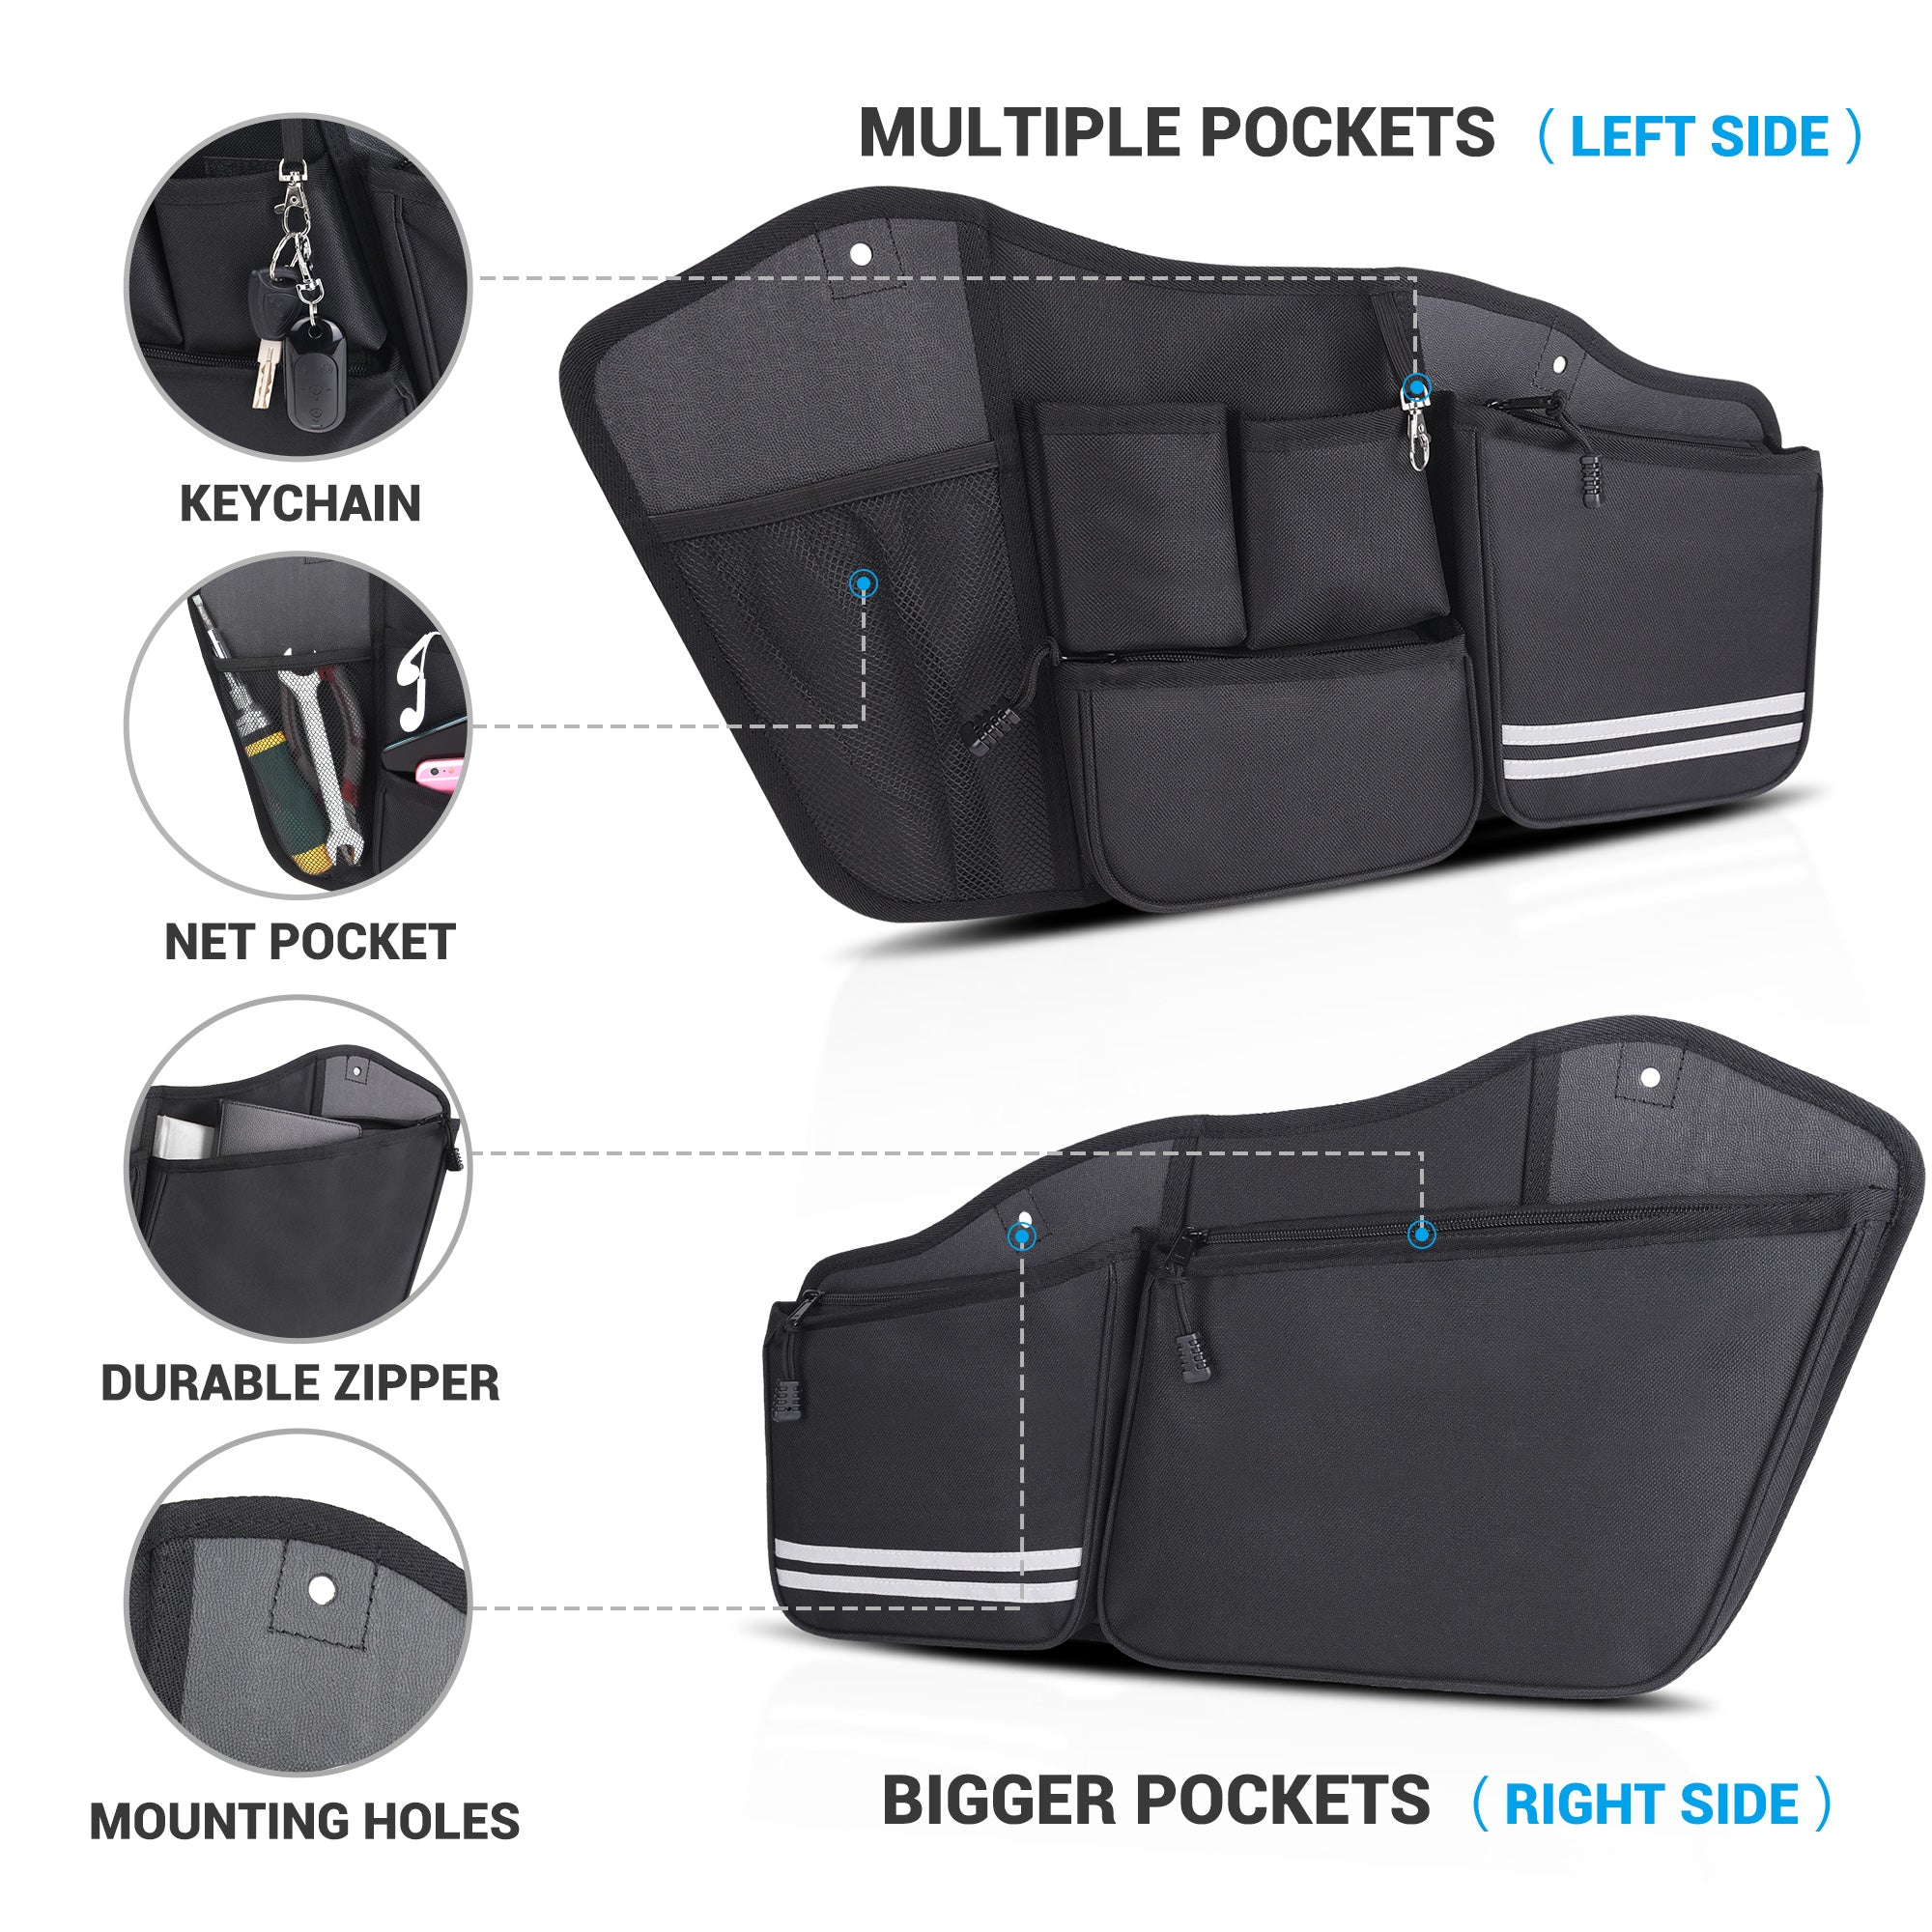 Saddle Bags Organizers Saddlebag Side Storage Bag for 2014-2020 Street Glide Road King Road Glide Electra Glide, 2 pack